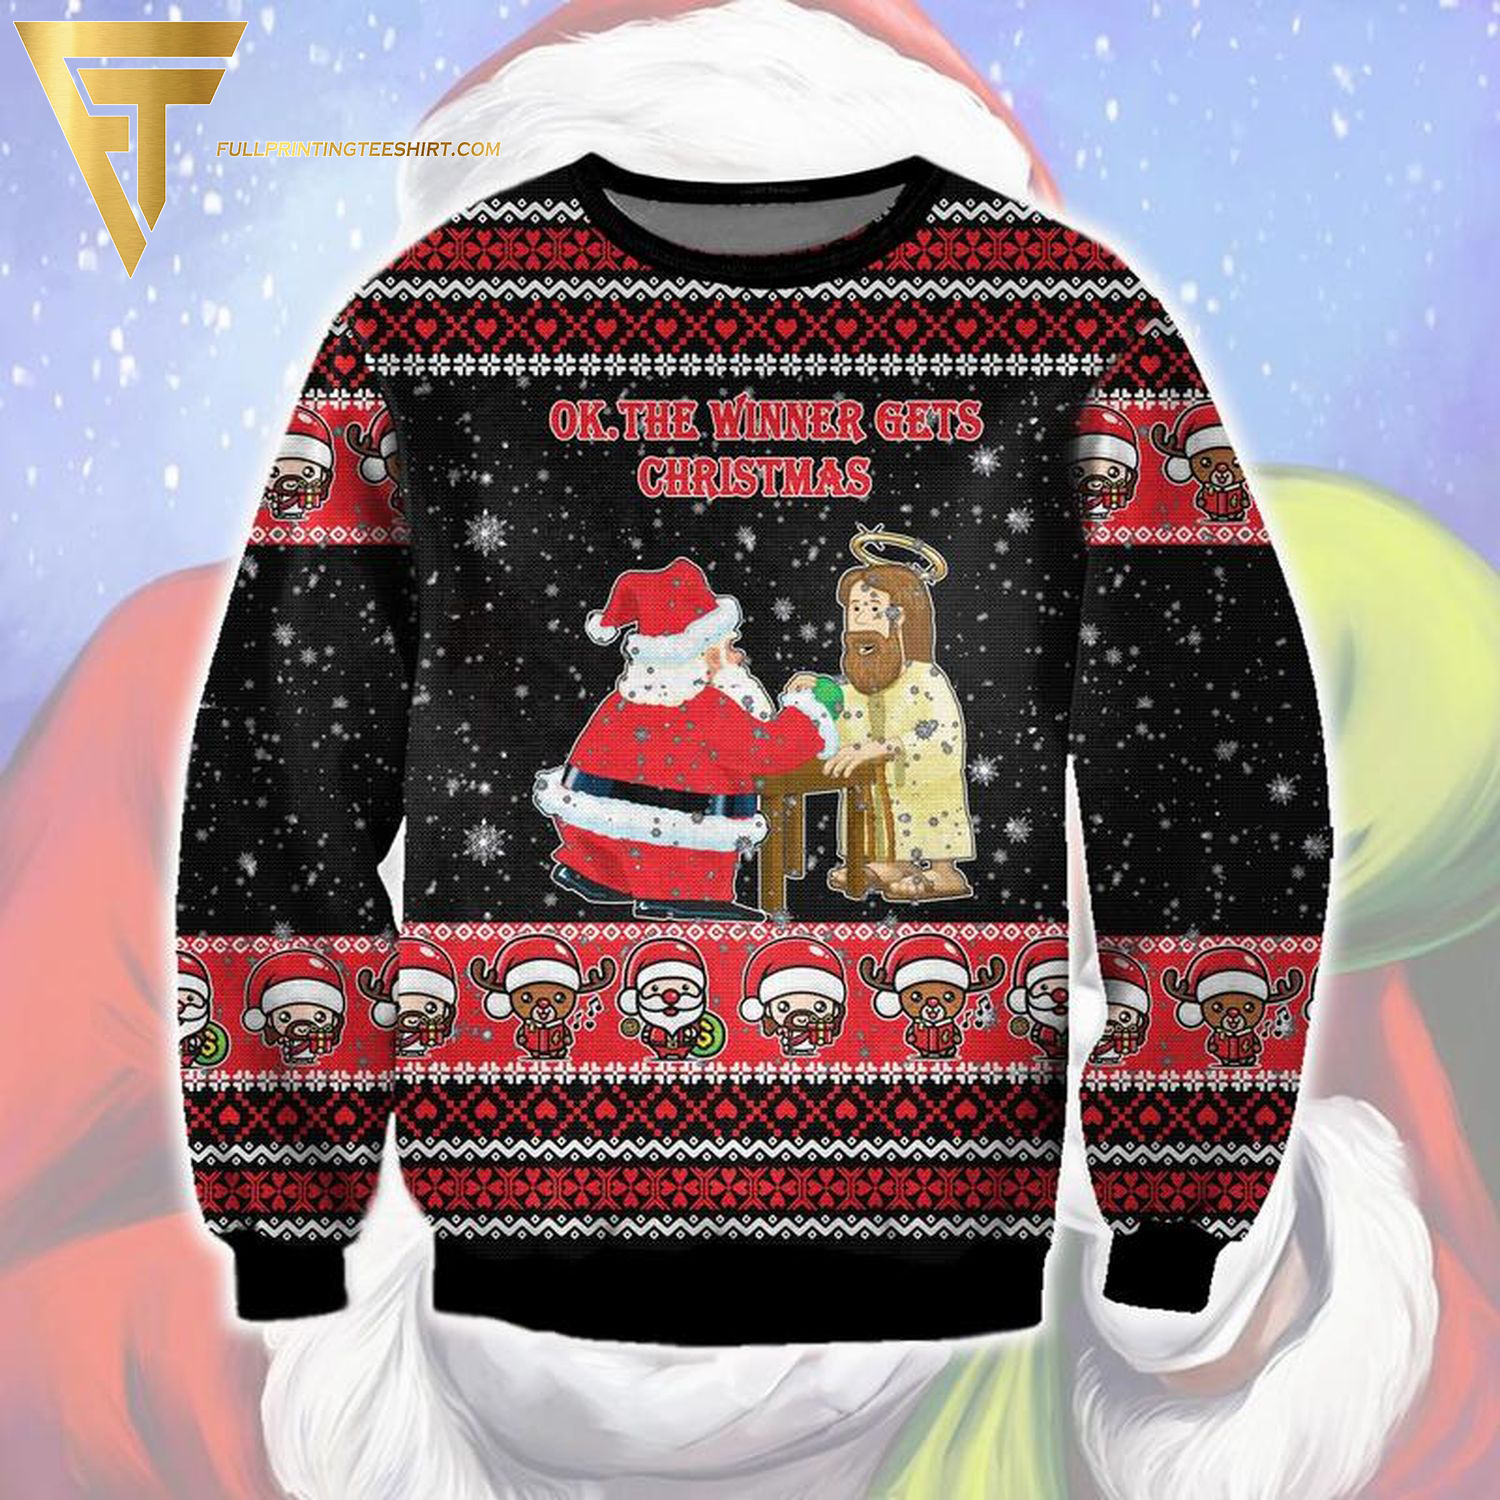 Jesus And Santa Ok The Winter Gets Christmas Full Print Ugly Christmas Sweater